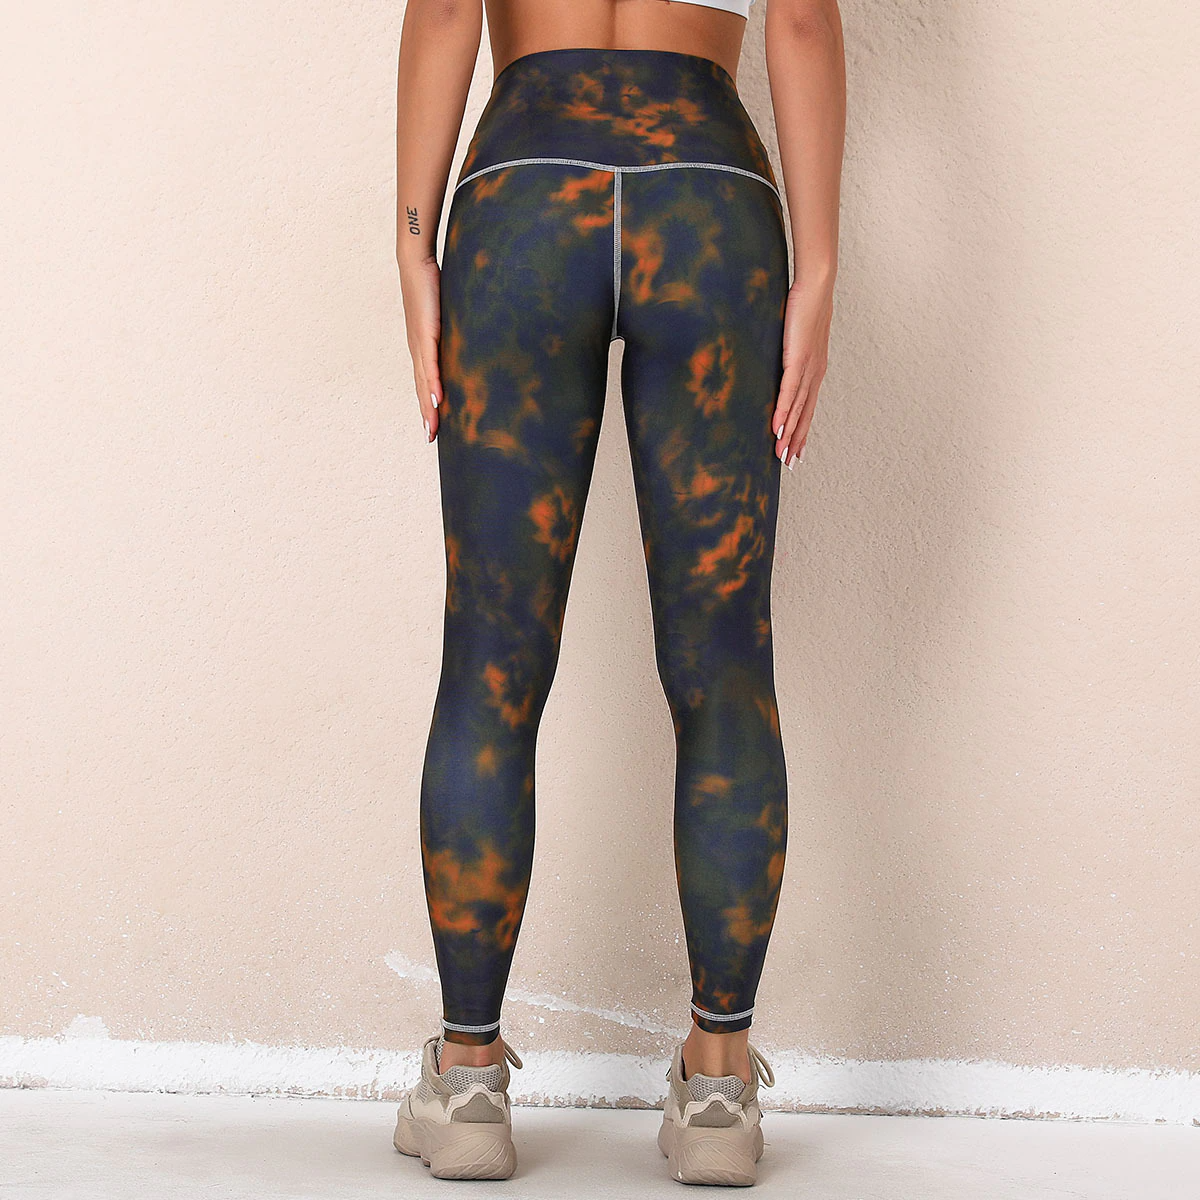 Colorful Yoga Pants for Women - skyjackerz